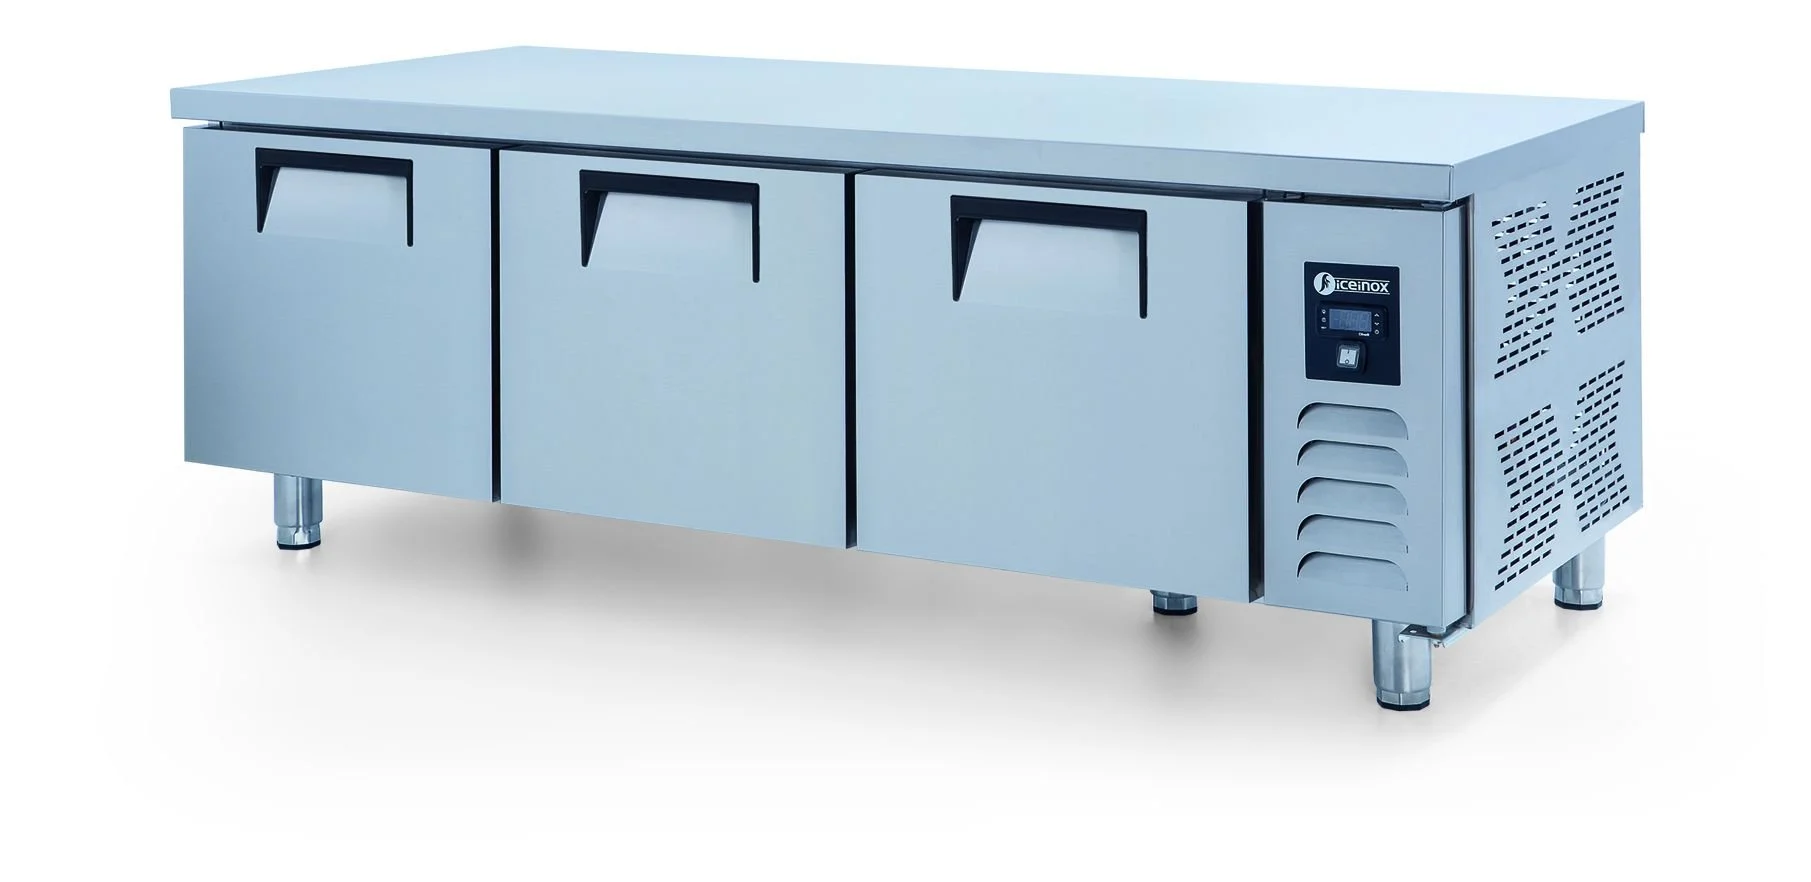 ICEINOX - Iceinox CTN 440 Kısa Model Tezgah Tip Buzdolabı, 3 Kapılı, 440 L